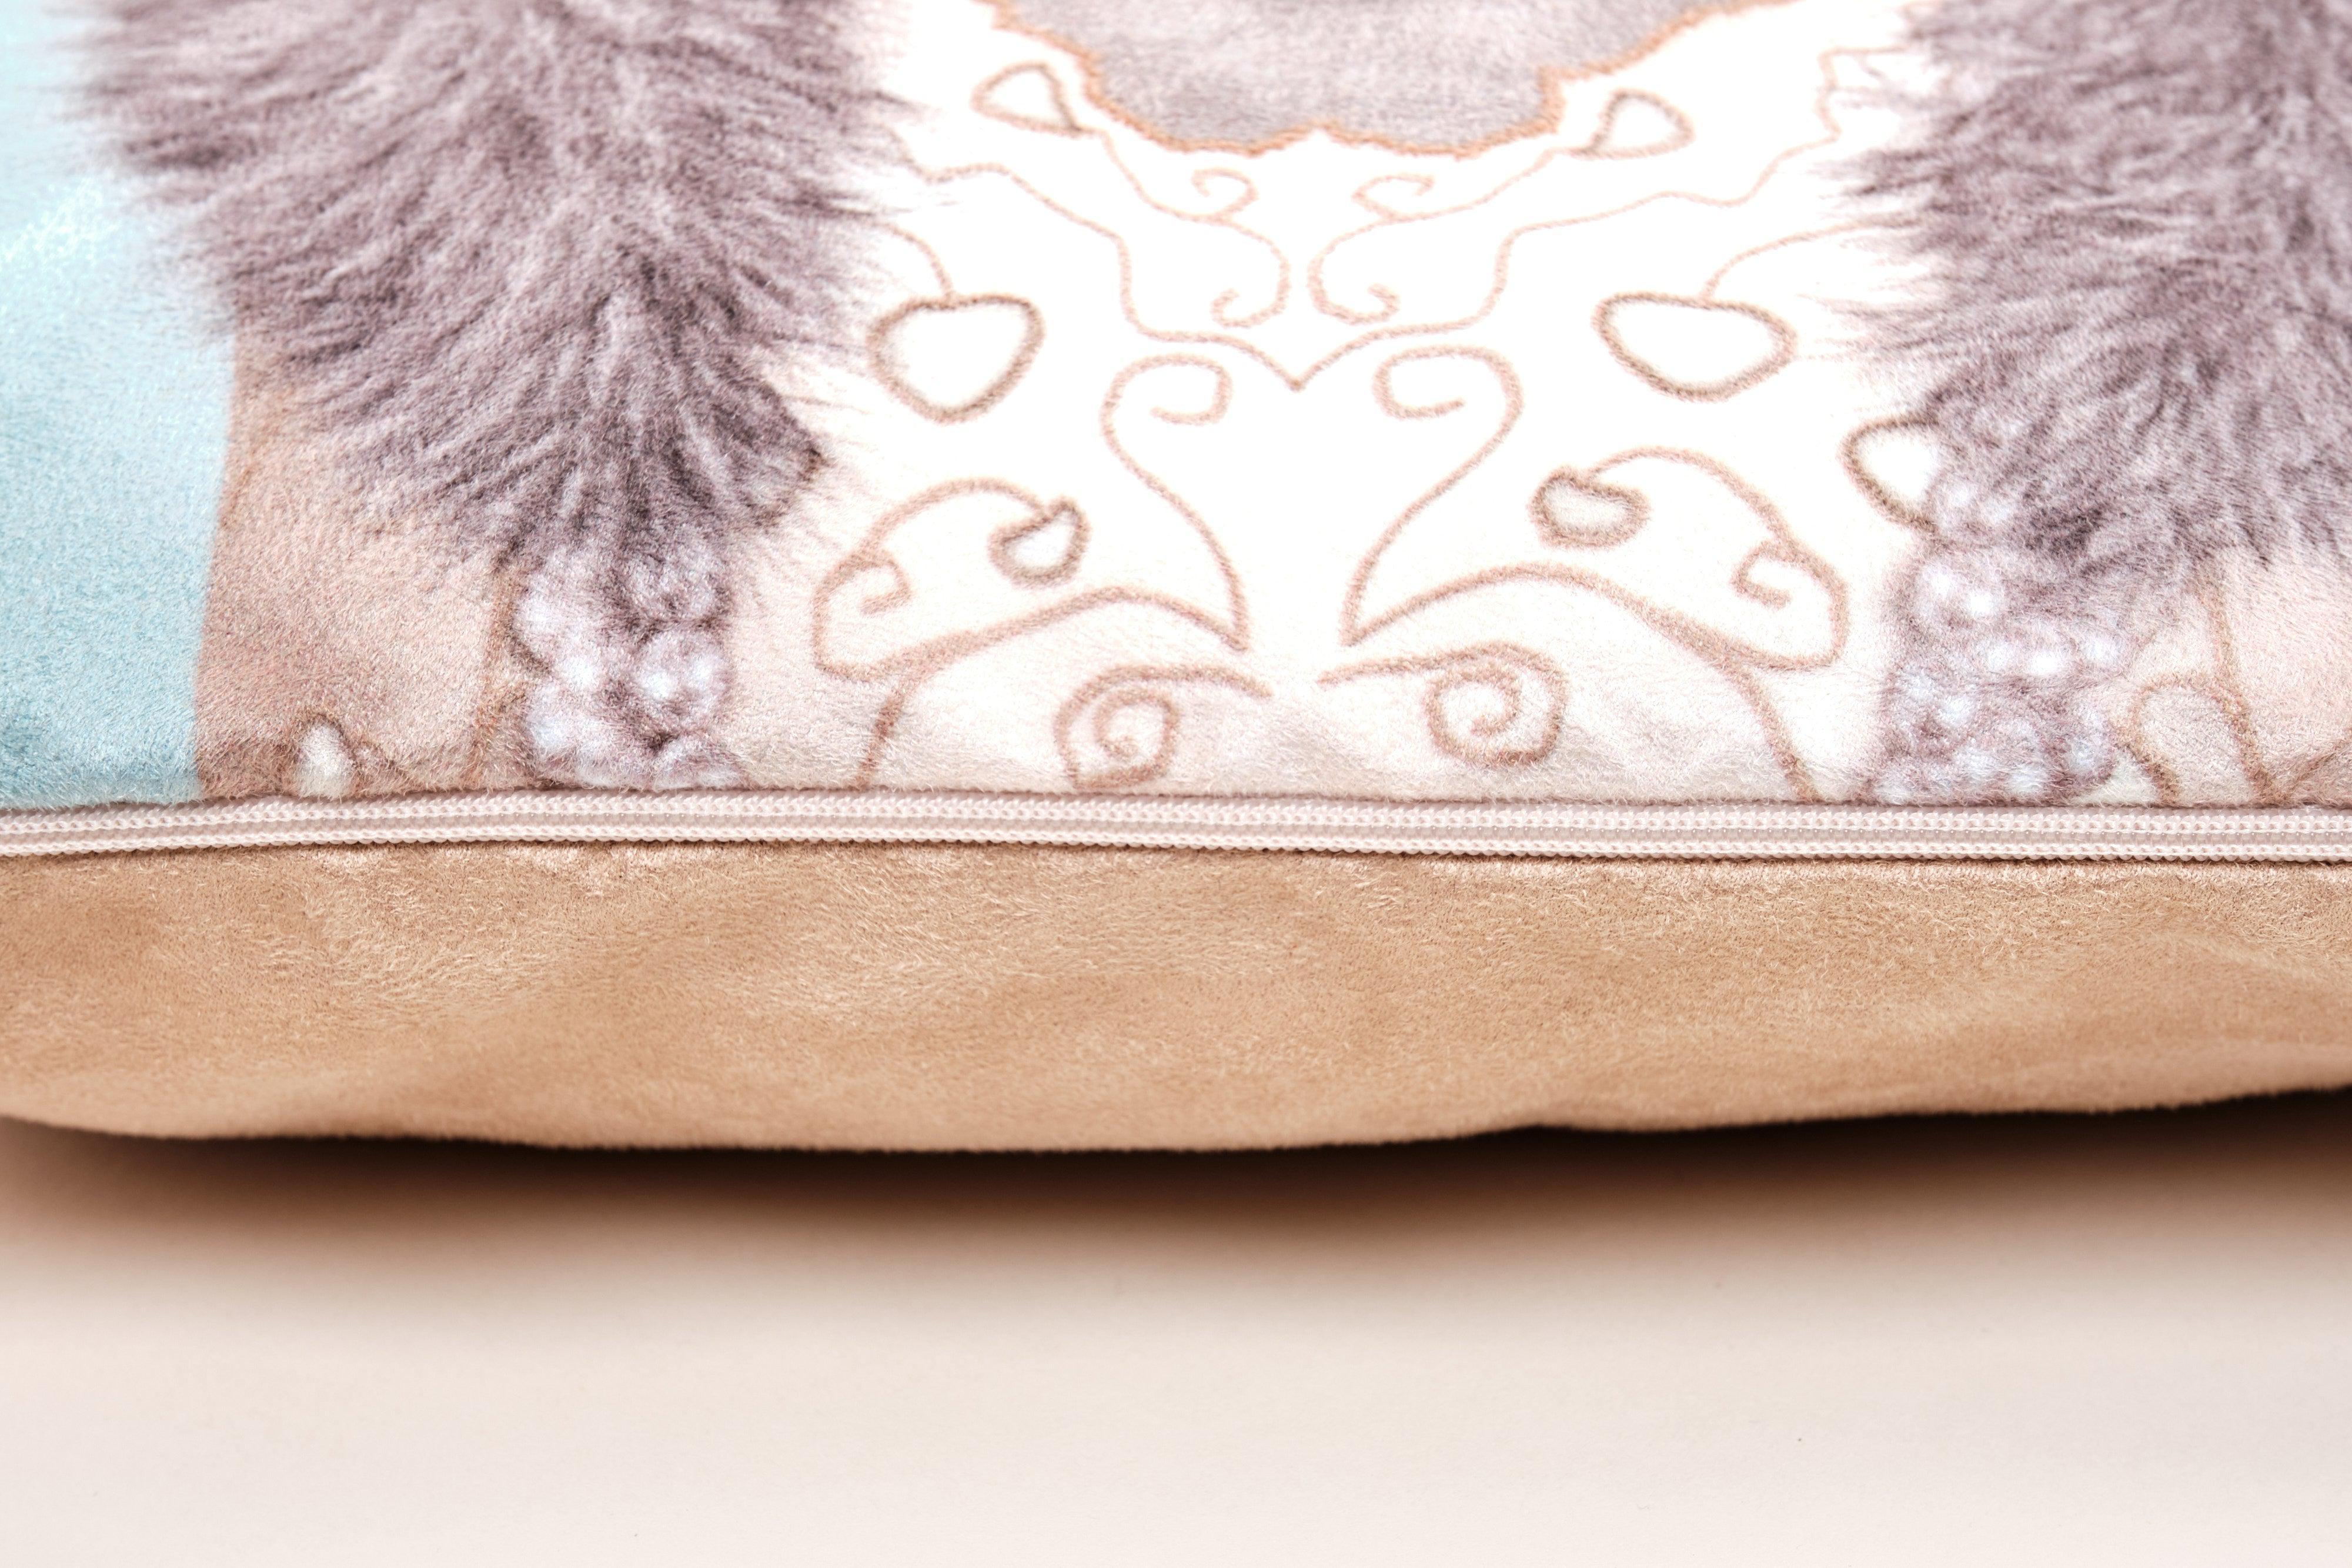 Home Sweet Home Wall - Paperlollipop Cushion - Handmade Cushions UK - WeLoveCushions